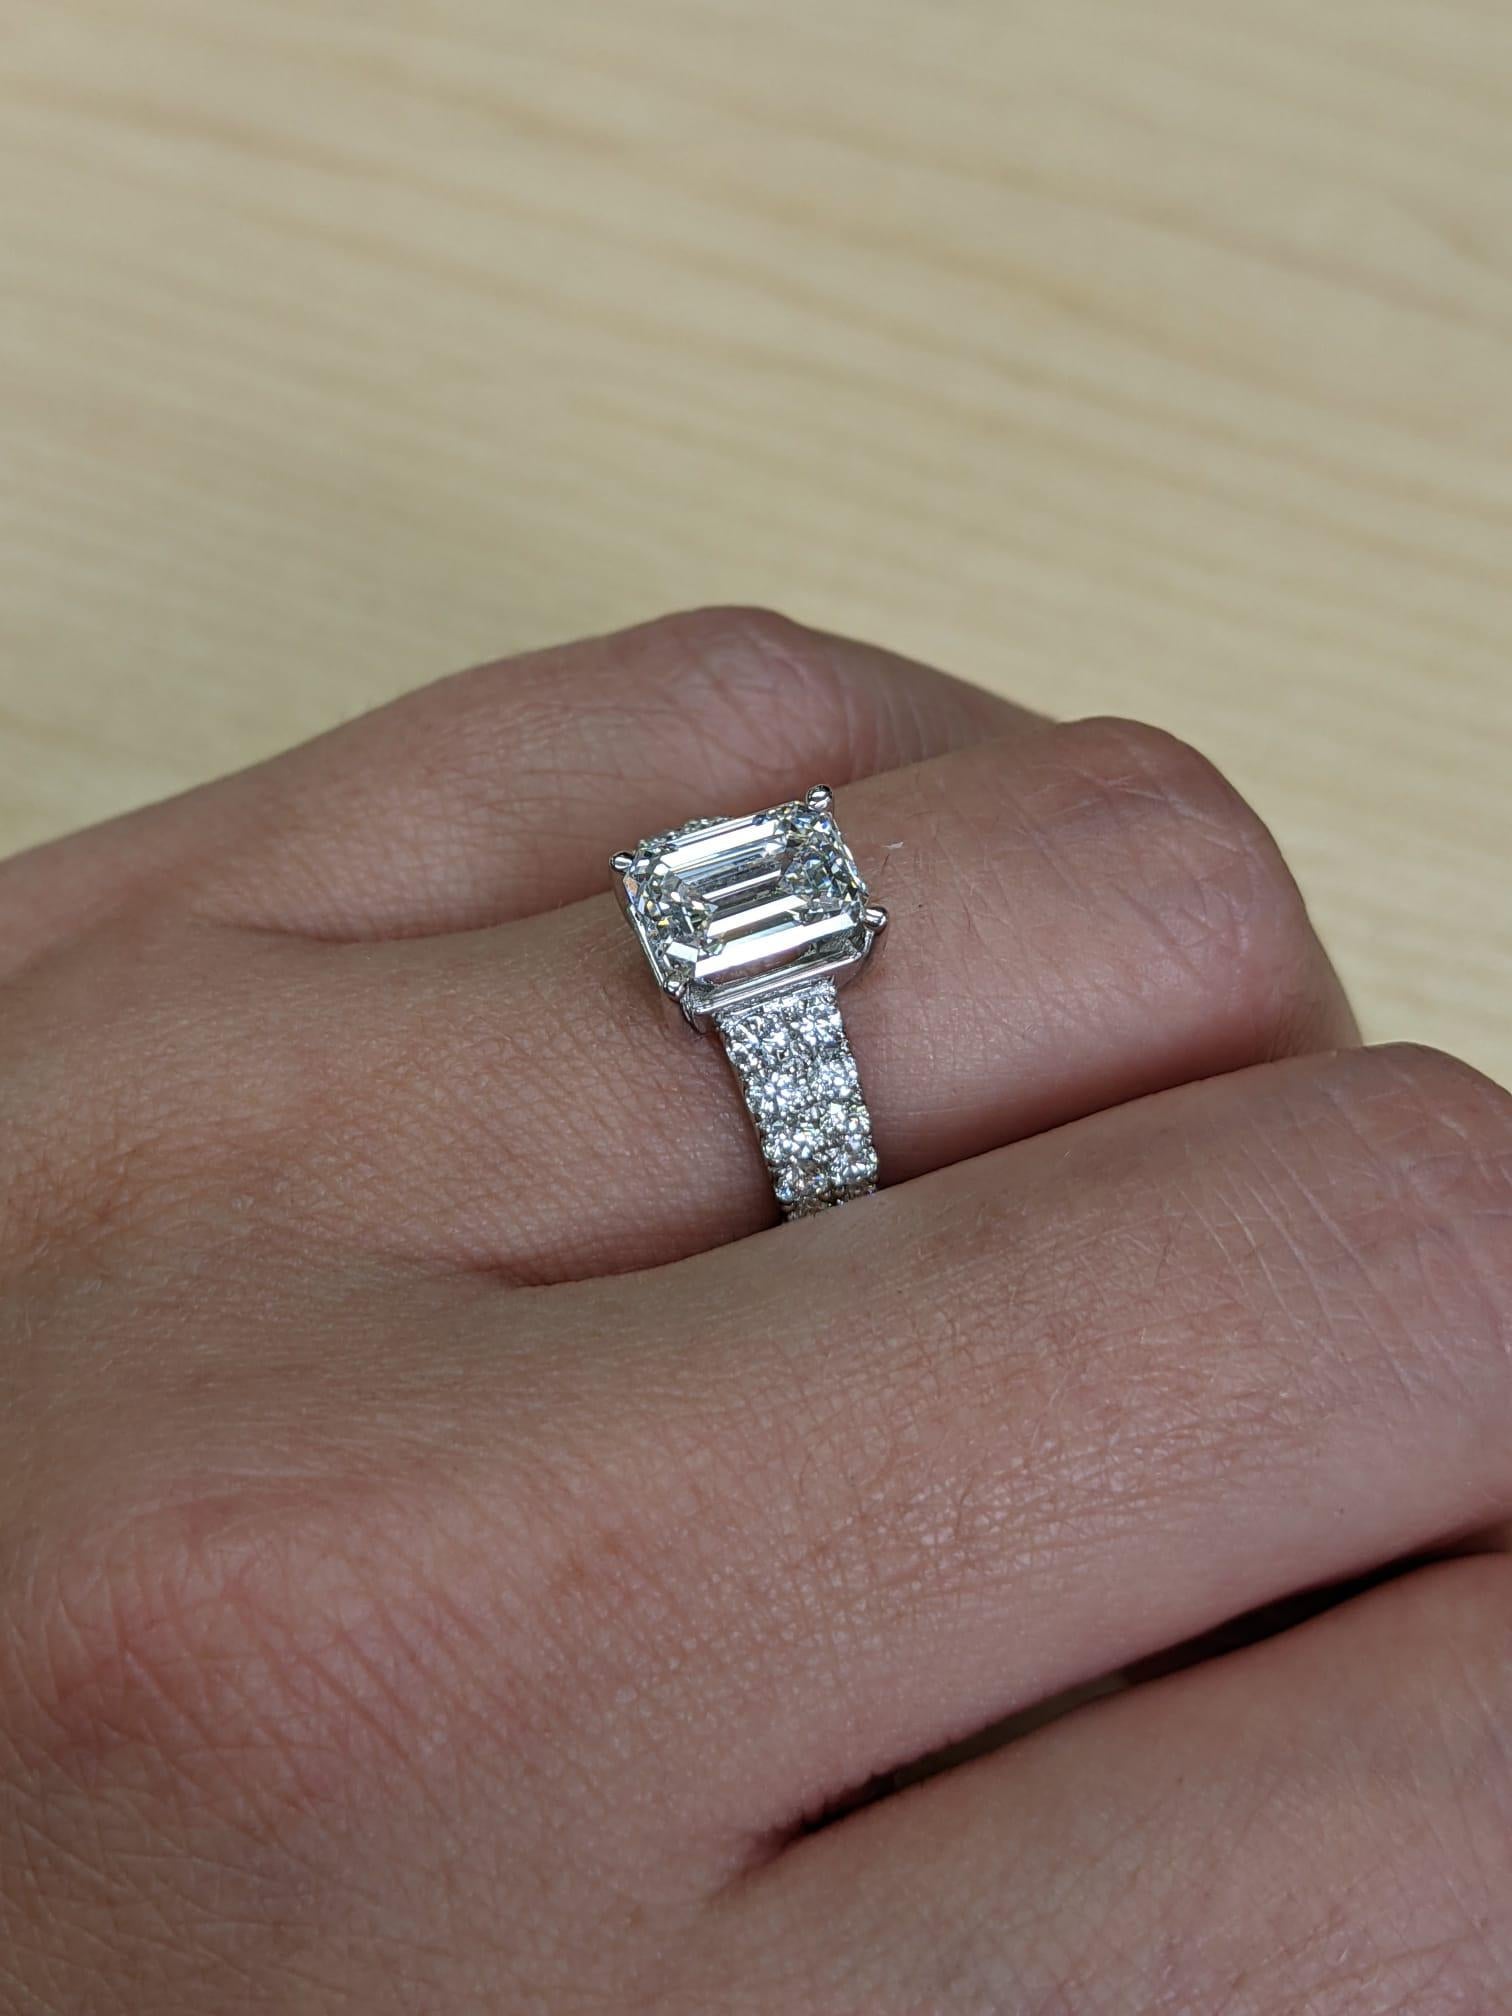 2 carat flawless diamond ring